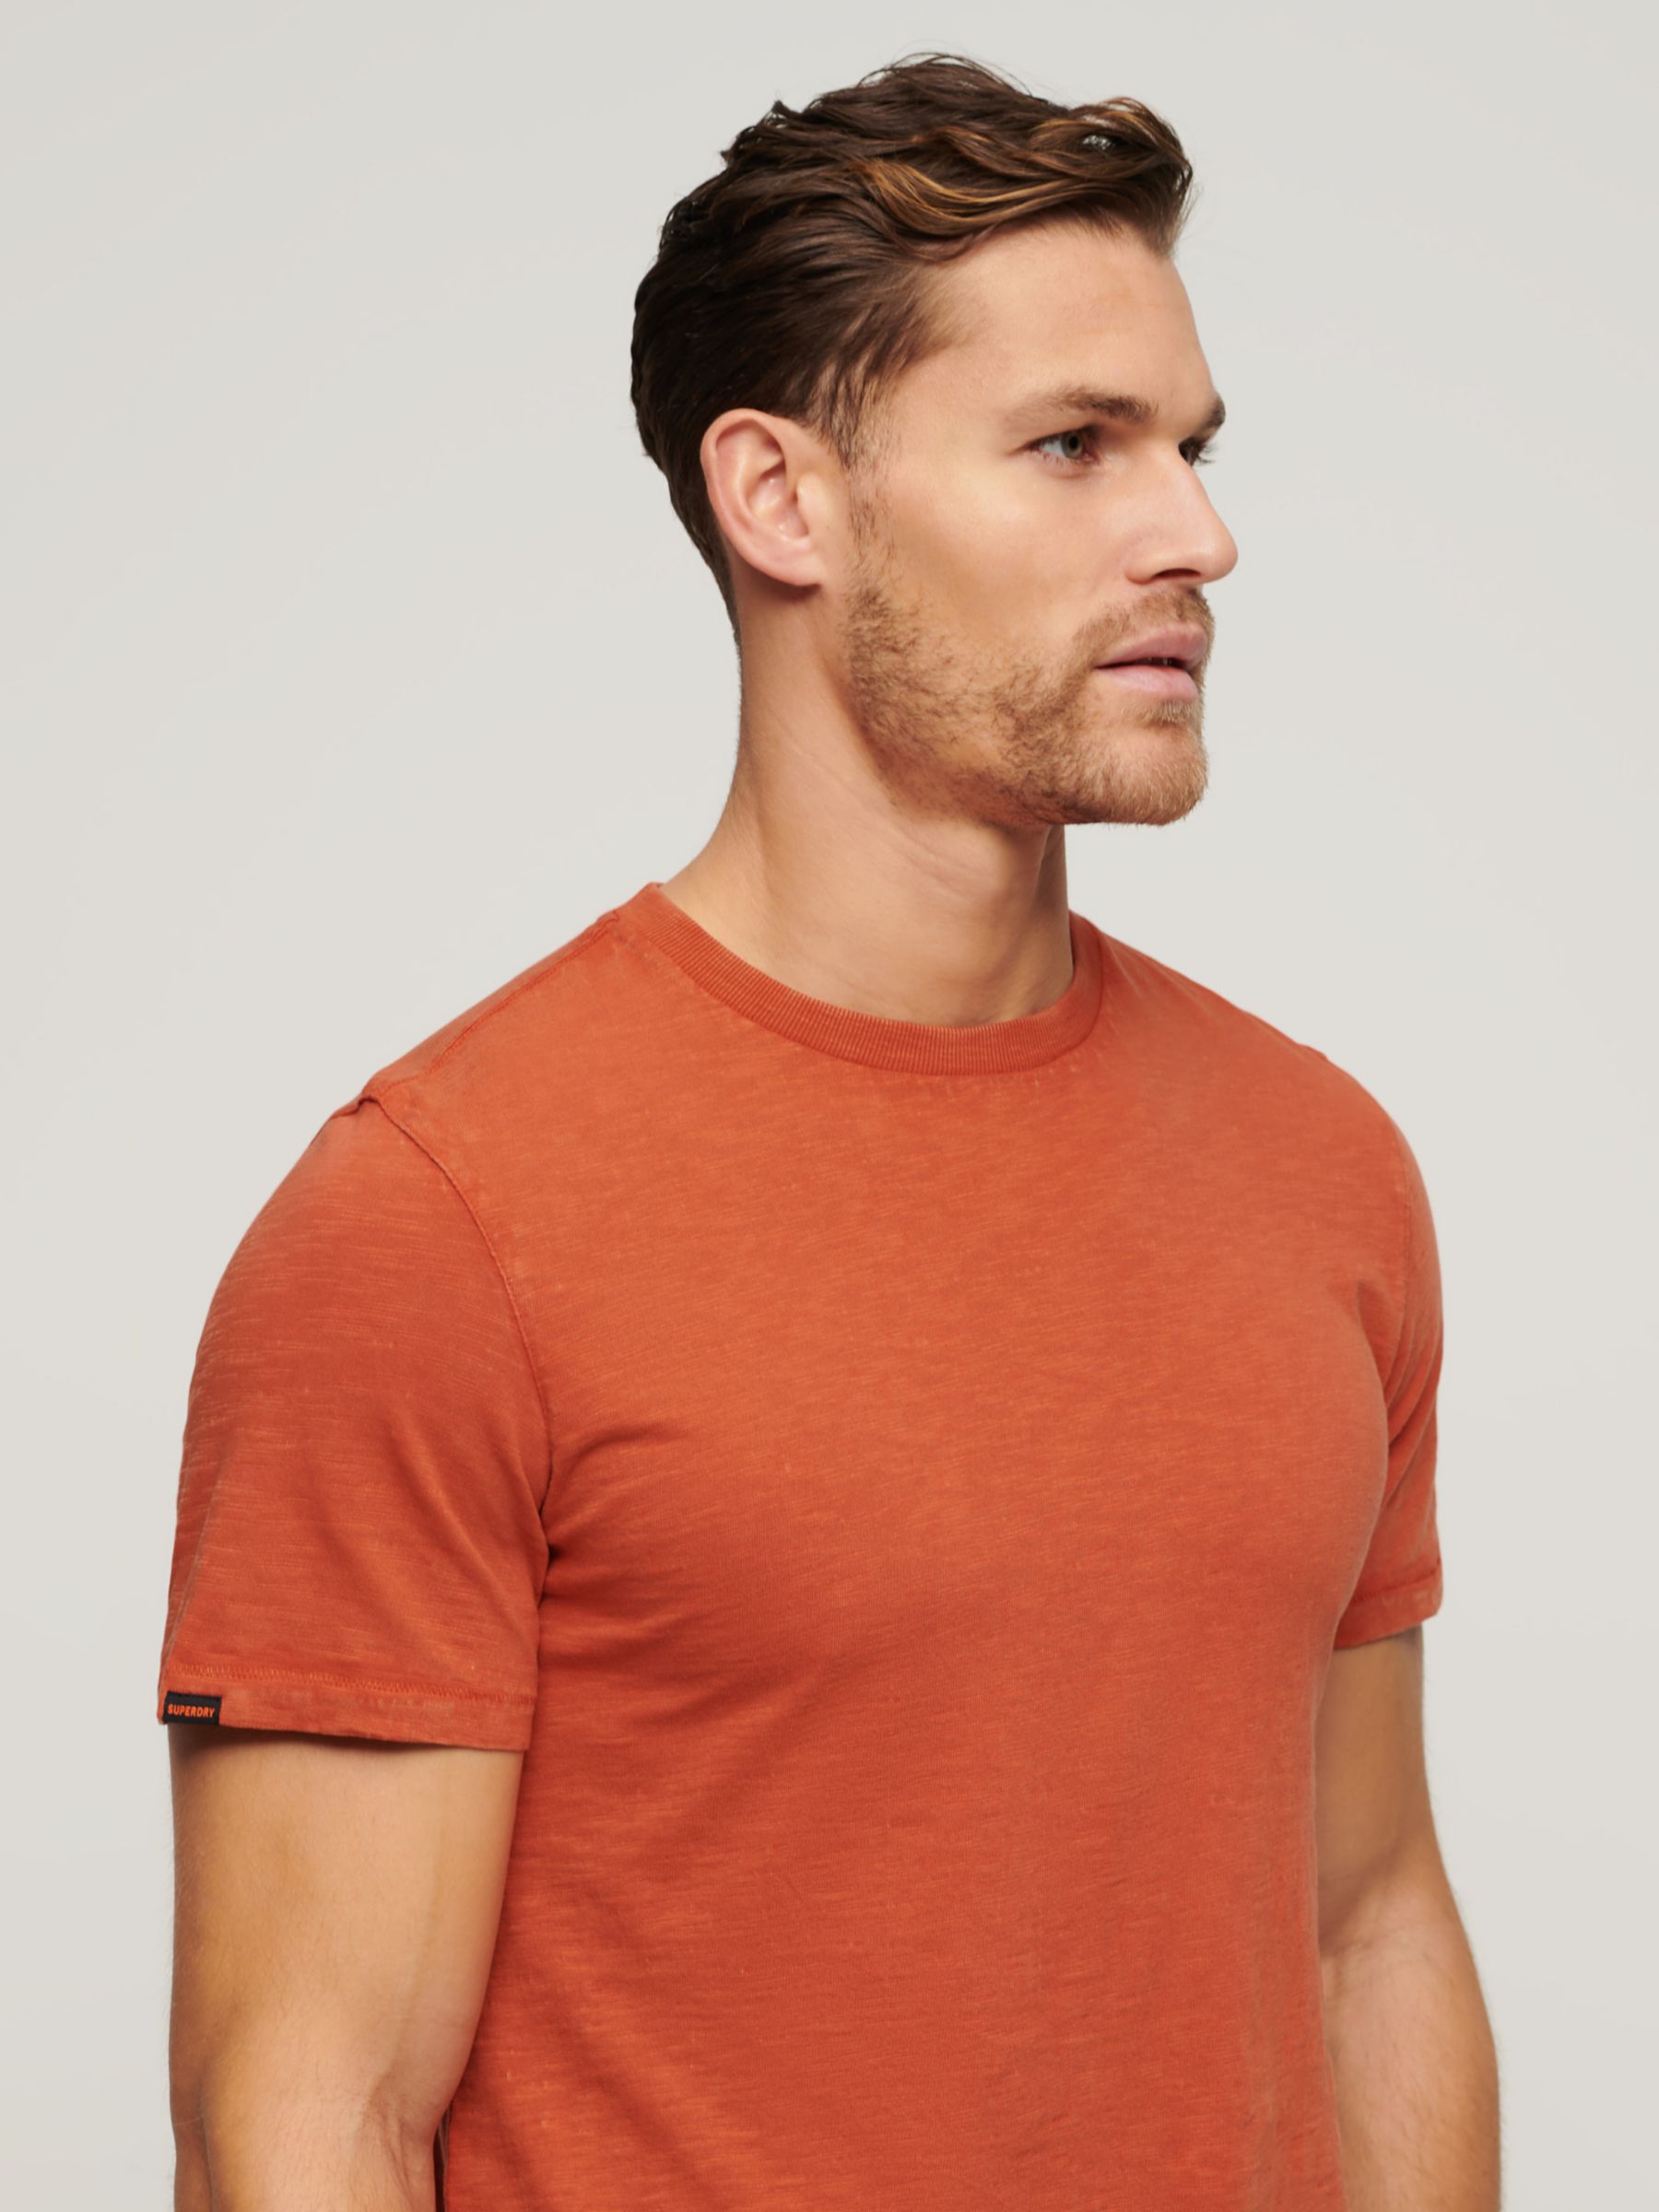 Buy Superdry Crew Neck Slub Short Sleeved T-Shirt, Orange Online at johnlewis.com